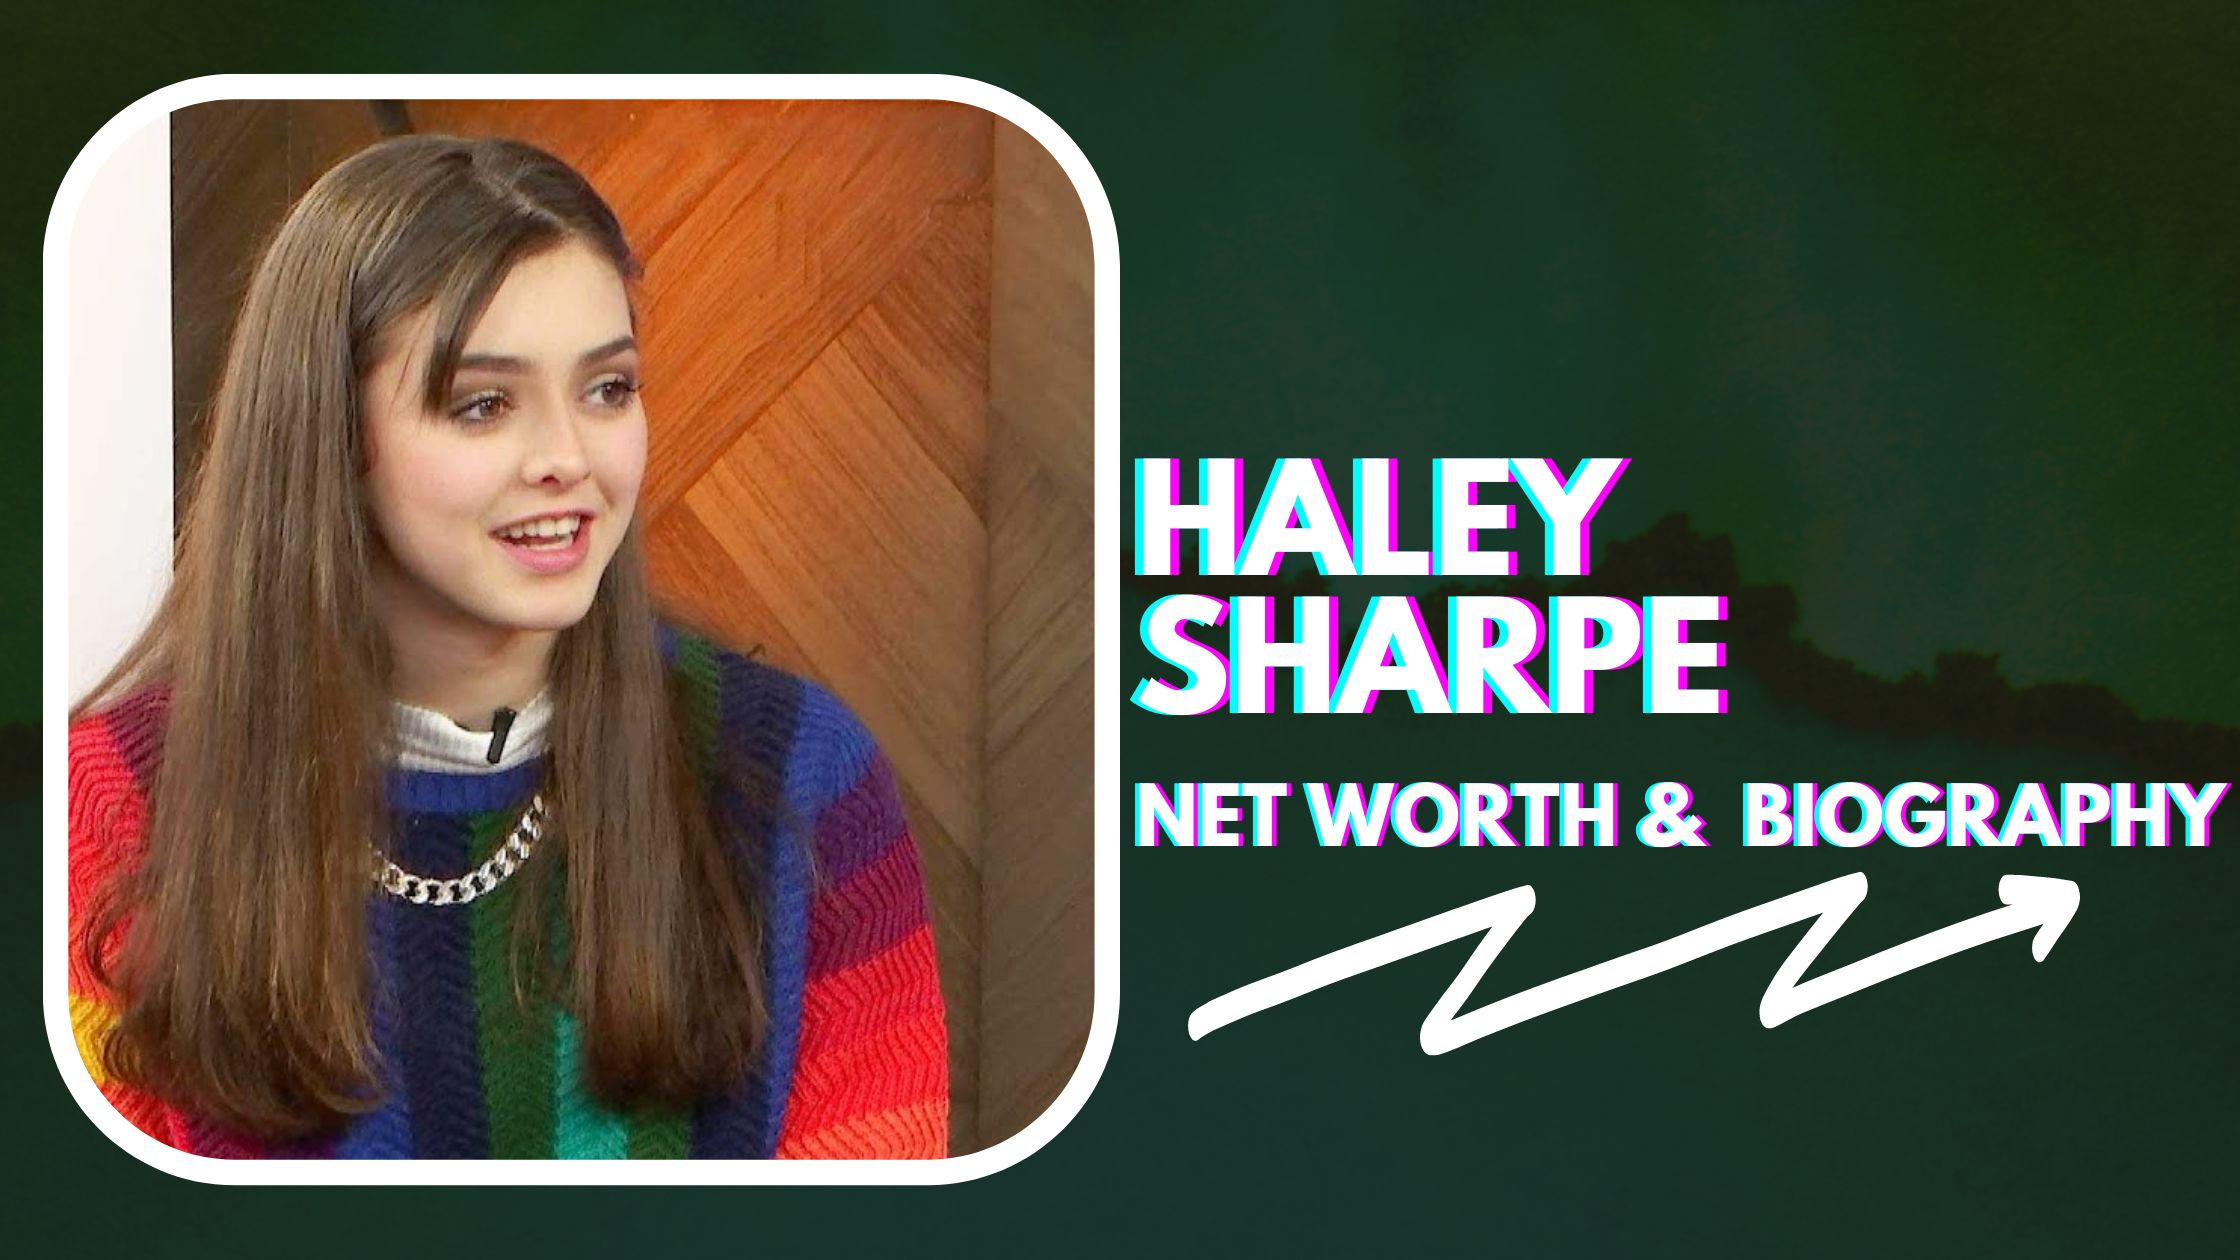 Haley Sharpe Biography, Net Worth and Career